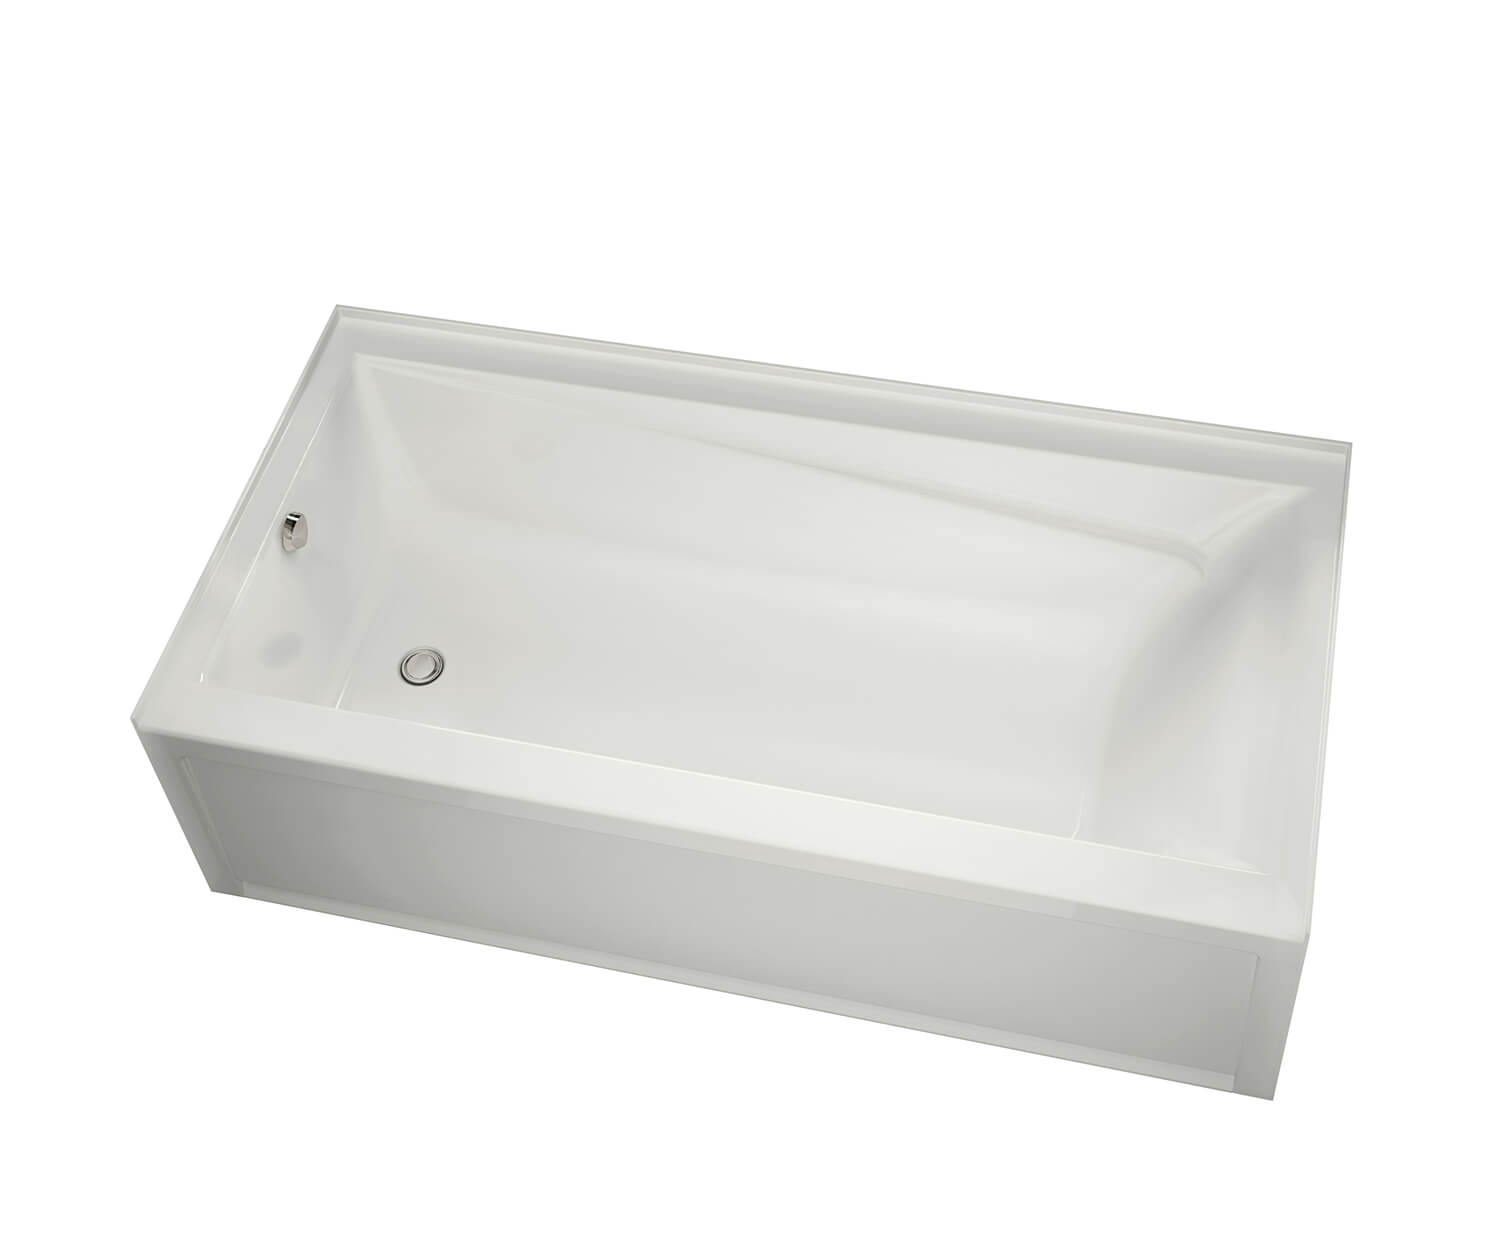 New Town 6032 IFS Acrylic Alcove Left-Hand Drain Bathtub in White